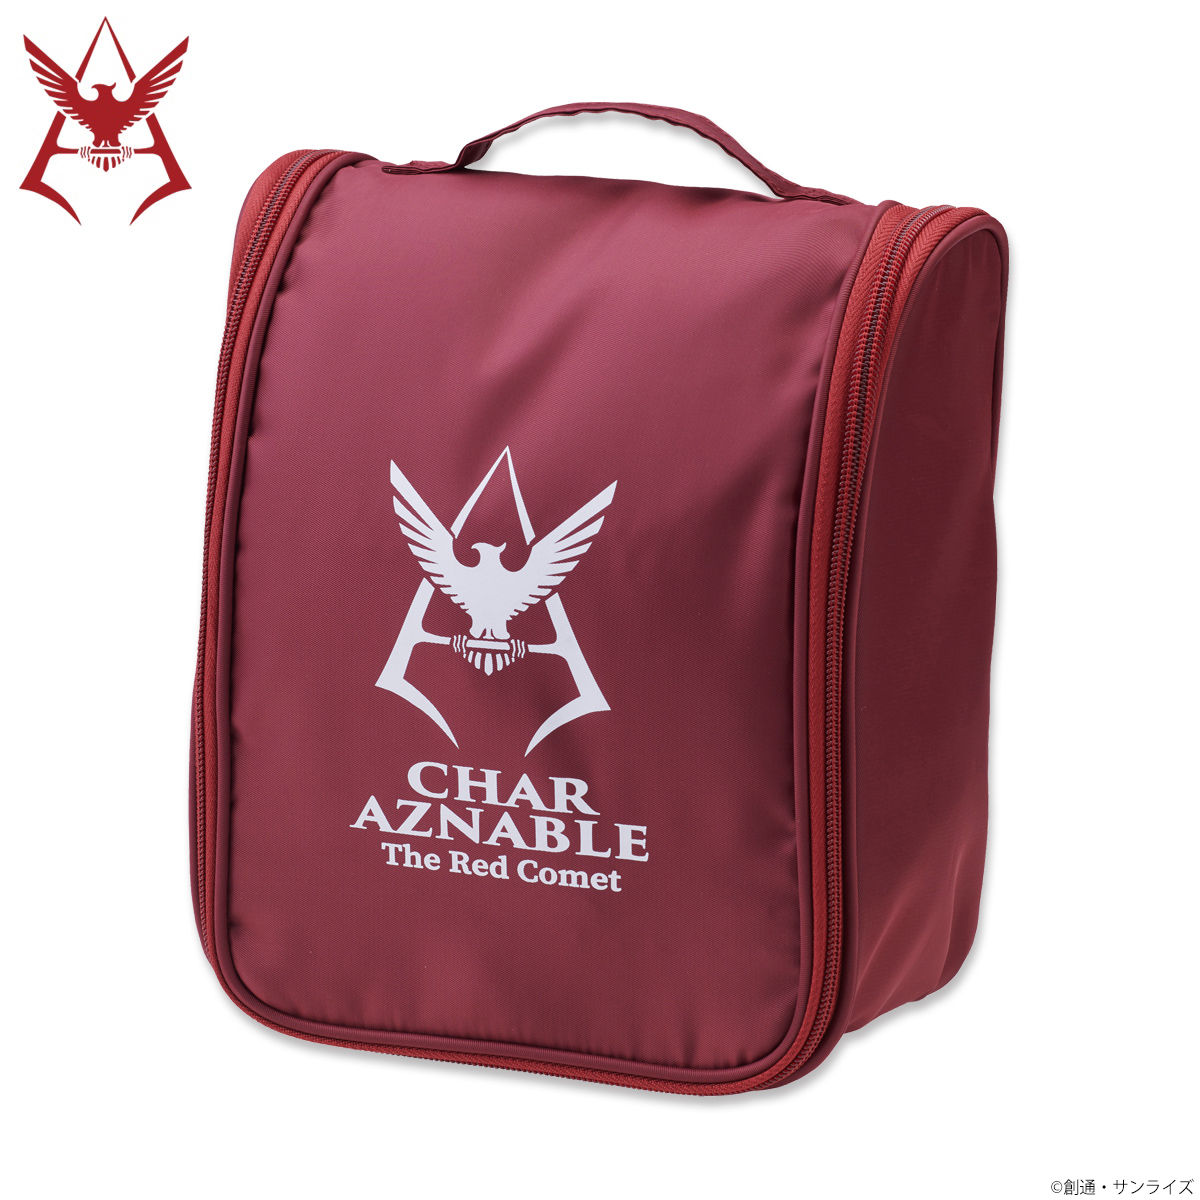 Mobile Suit Gundam Travel Bag